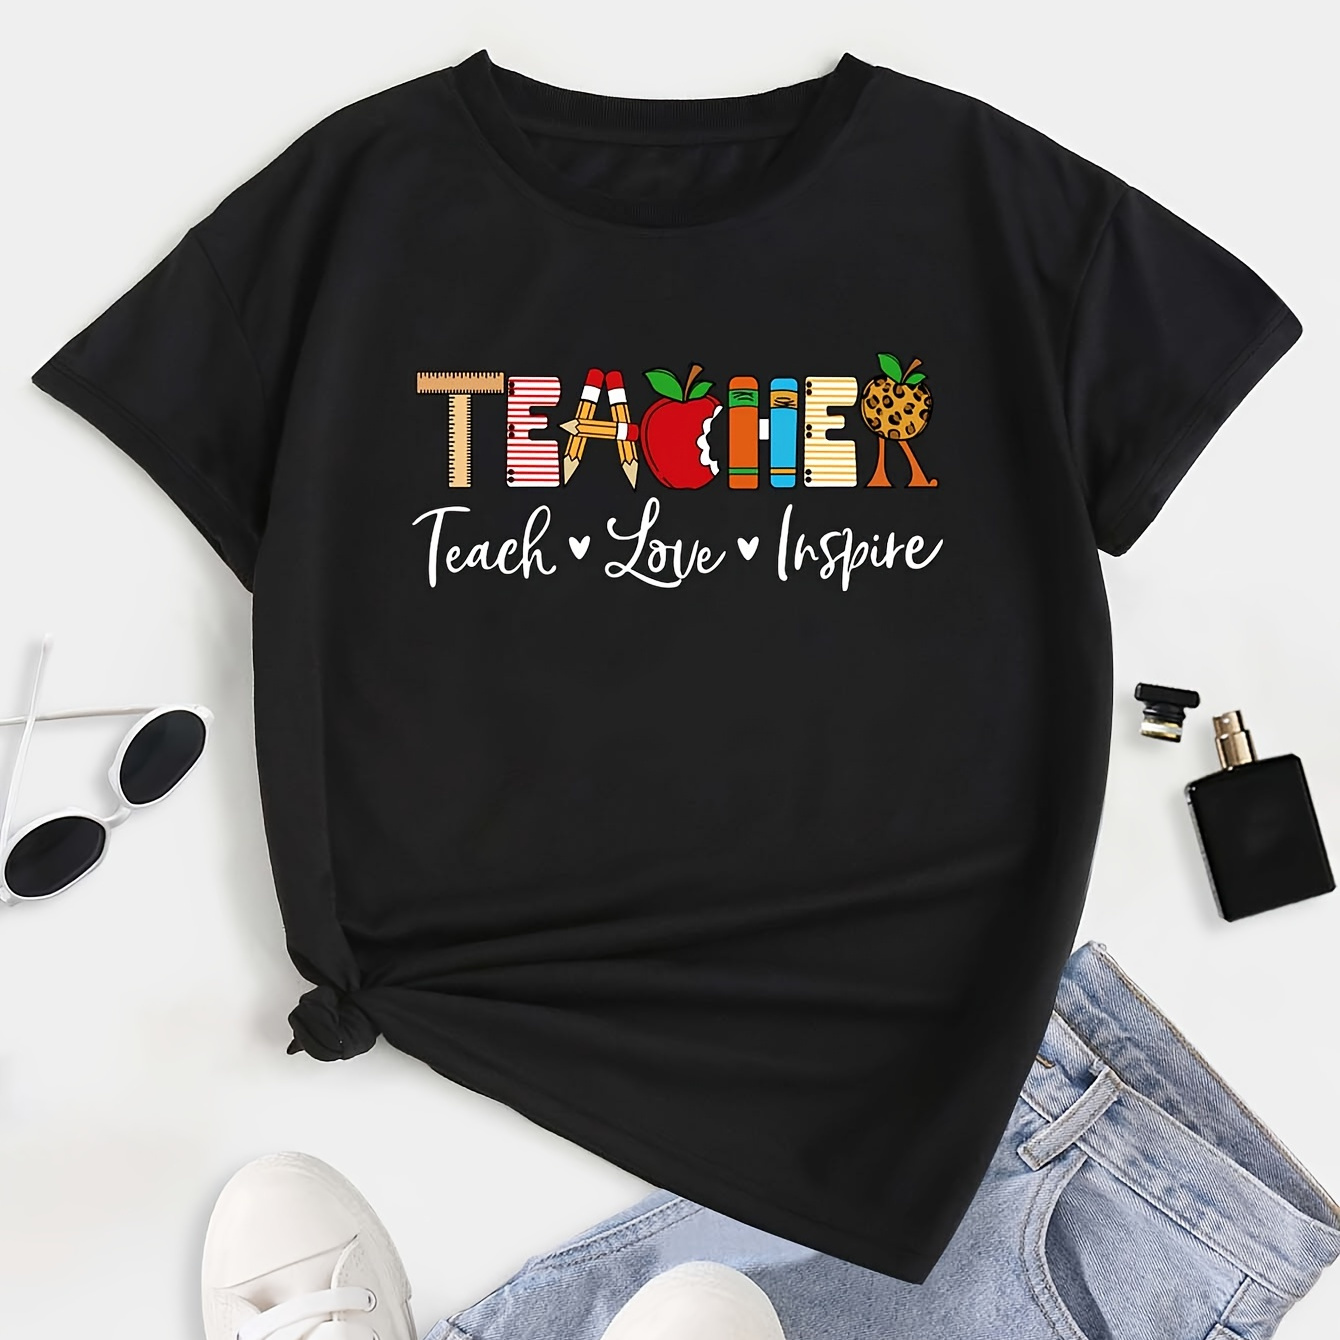 

Teacher Letter Print T-shirt, Short Sleeve Crew Neck Casual Top For Summer & Spring, Women's Clothing